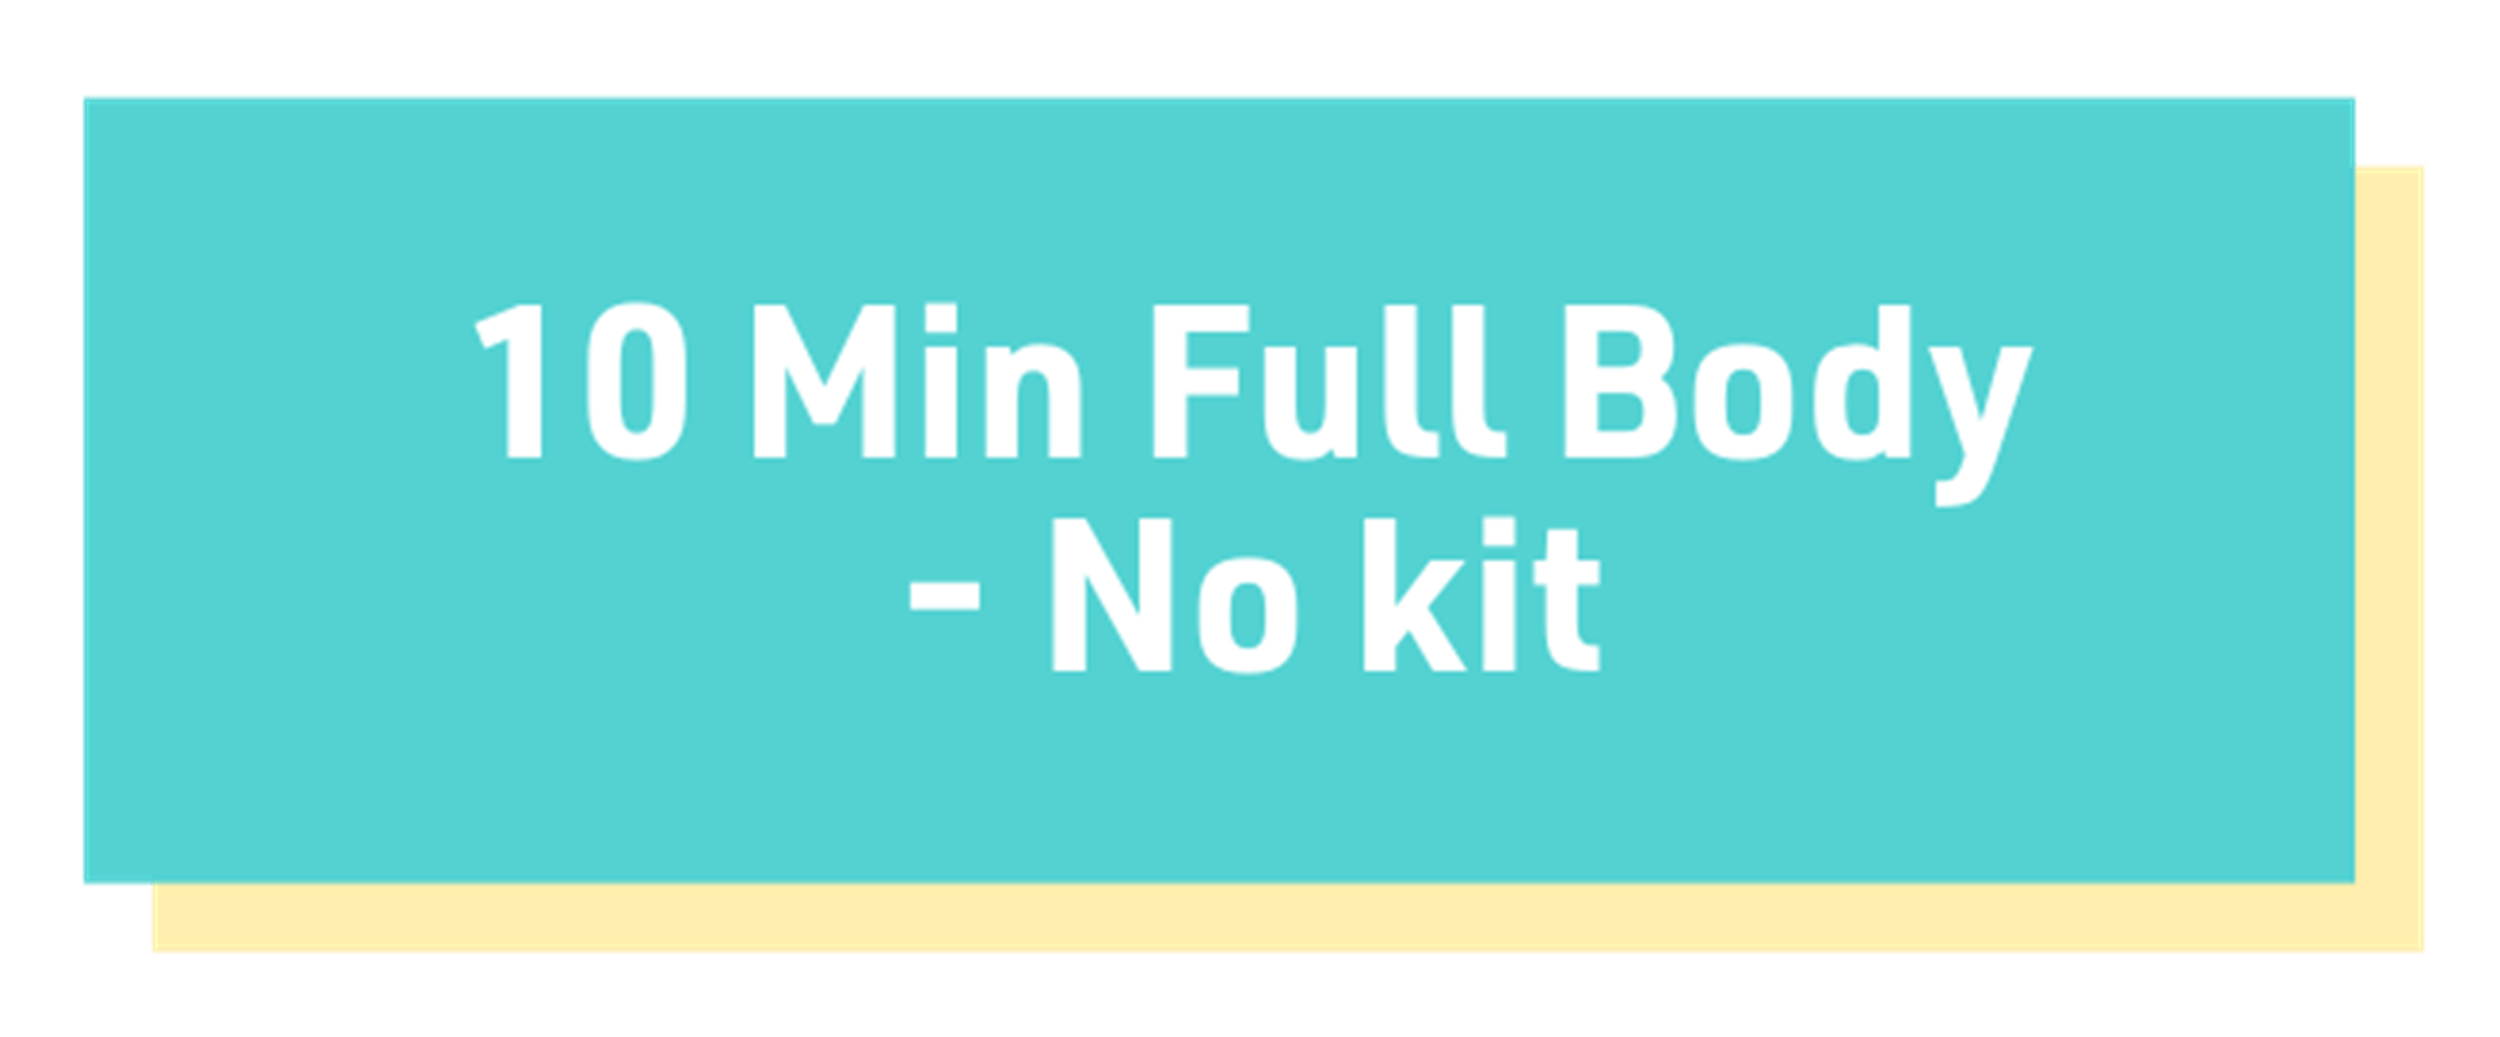 10 min full body - no kit